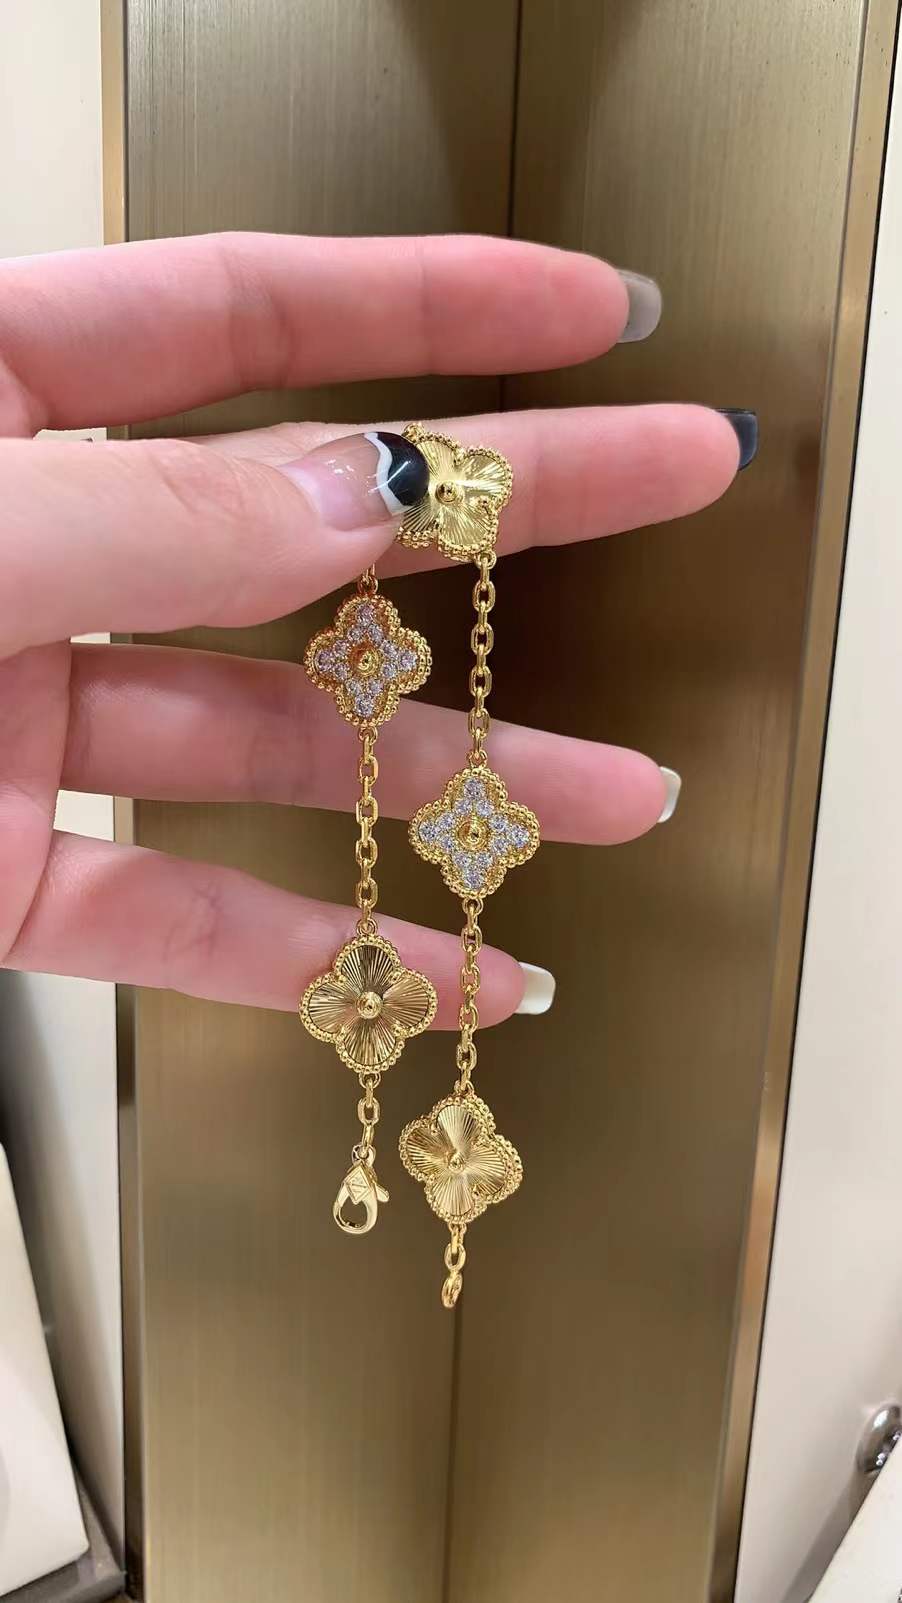 Van Cleef & Arpels Vintage Alhambra 5 Diamond Motifs Bracelet in Yellow Gold